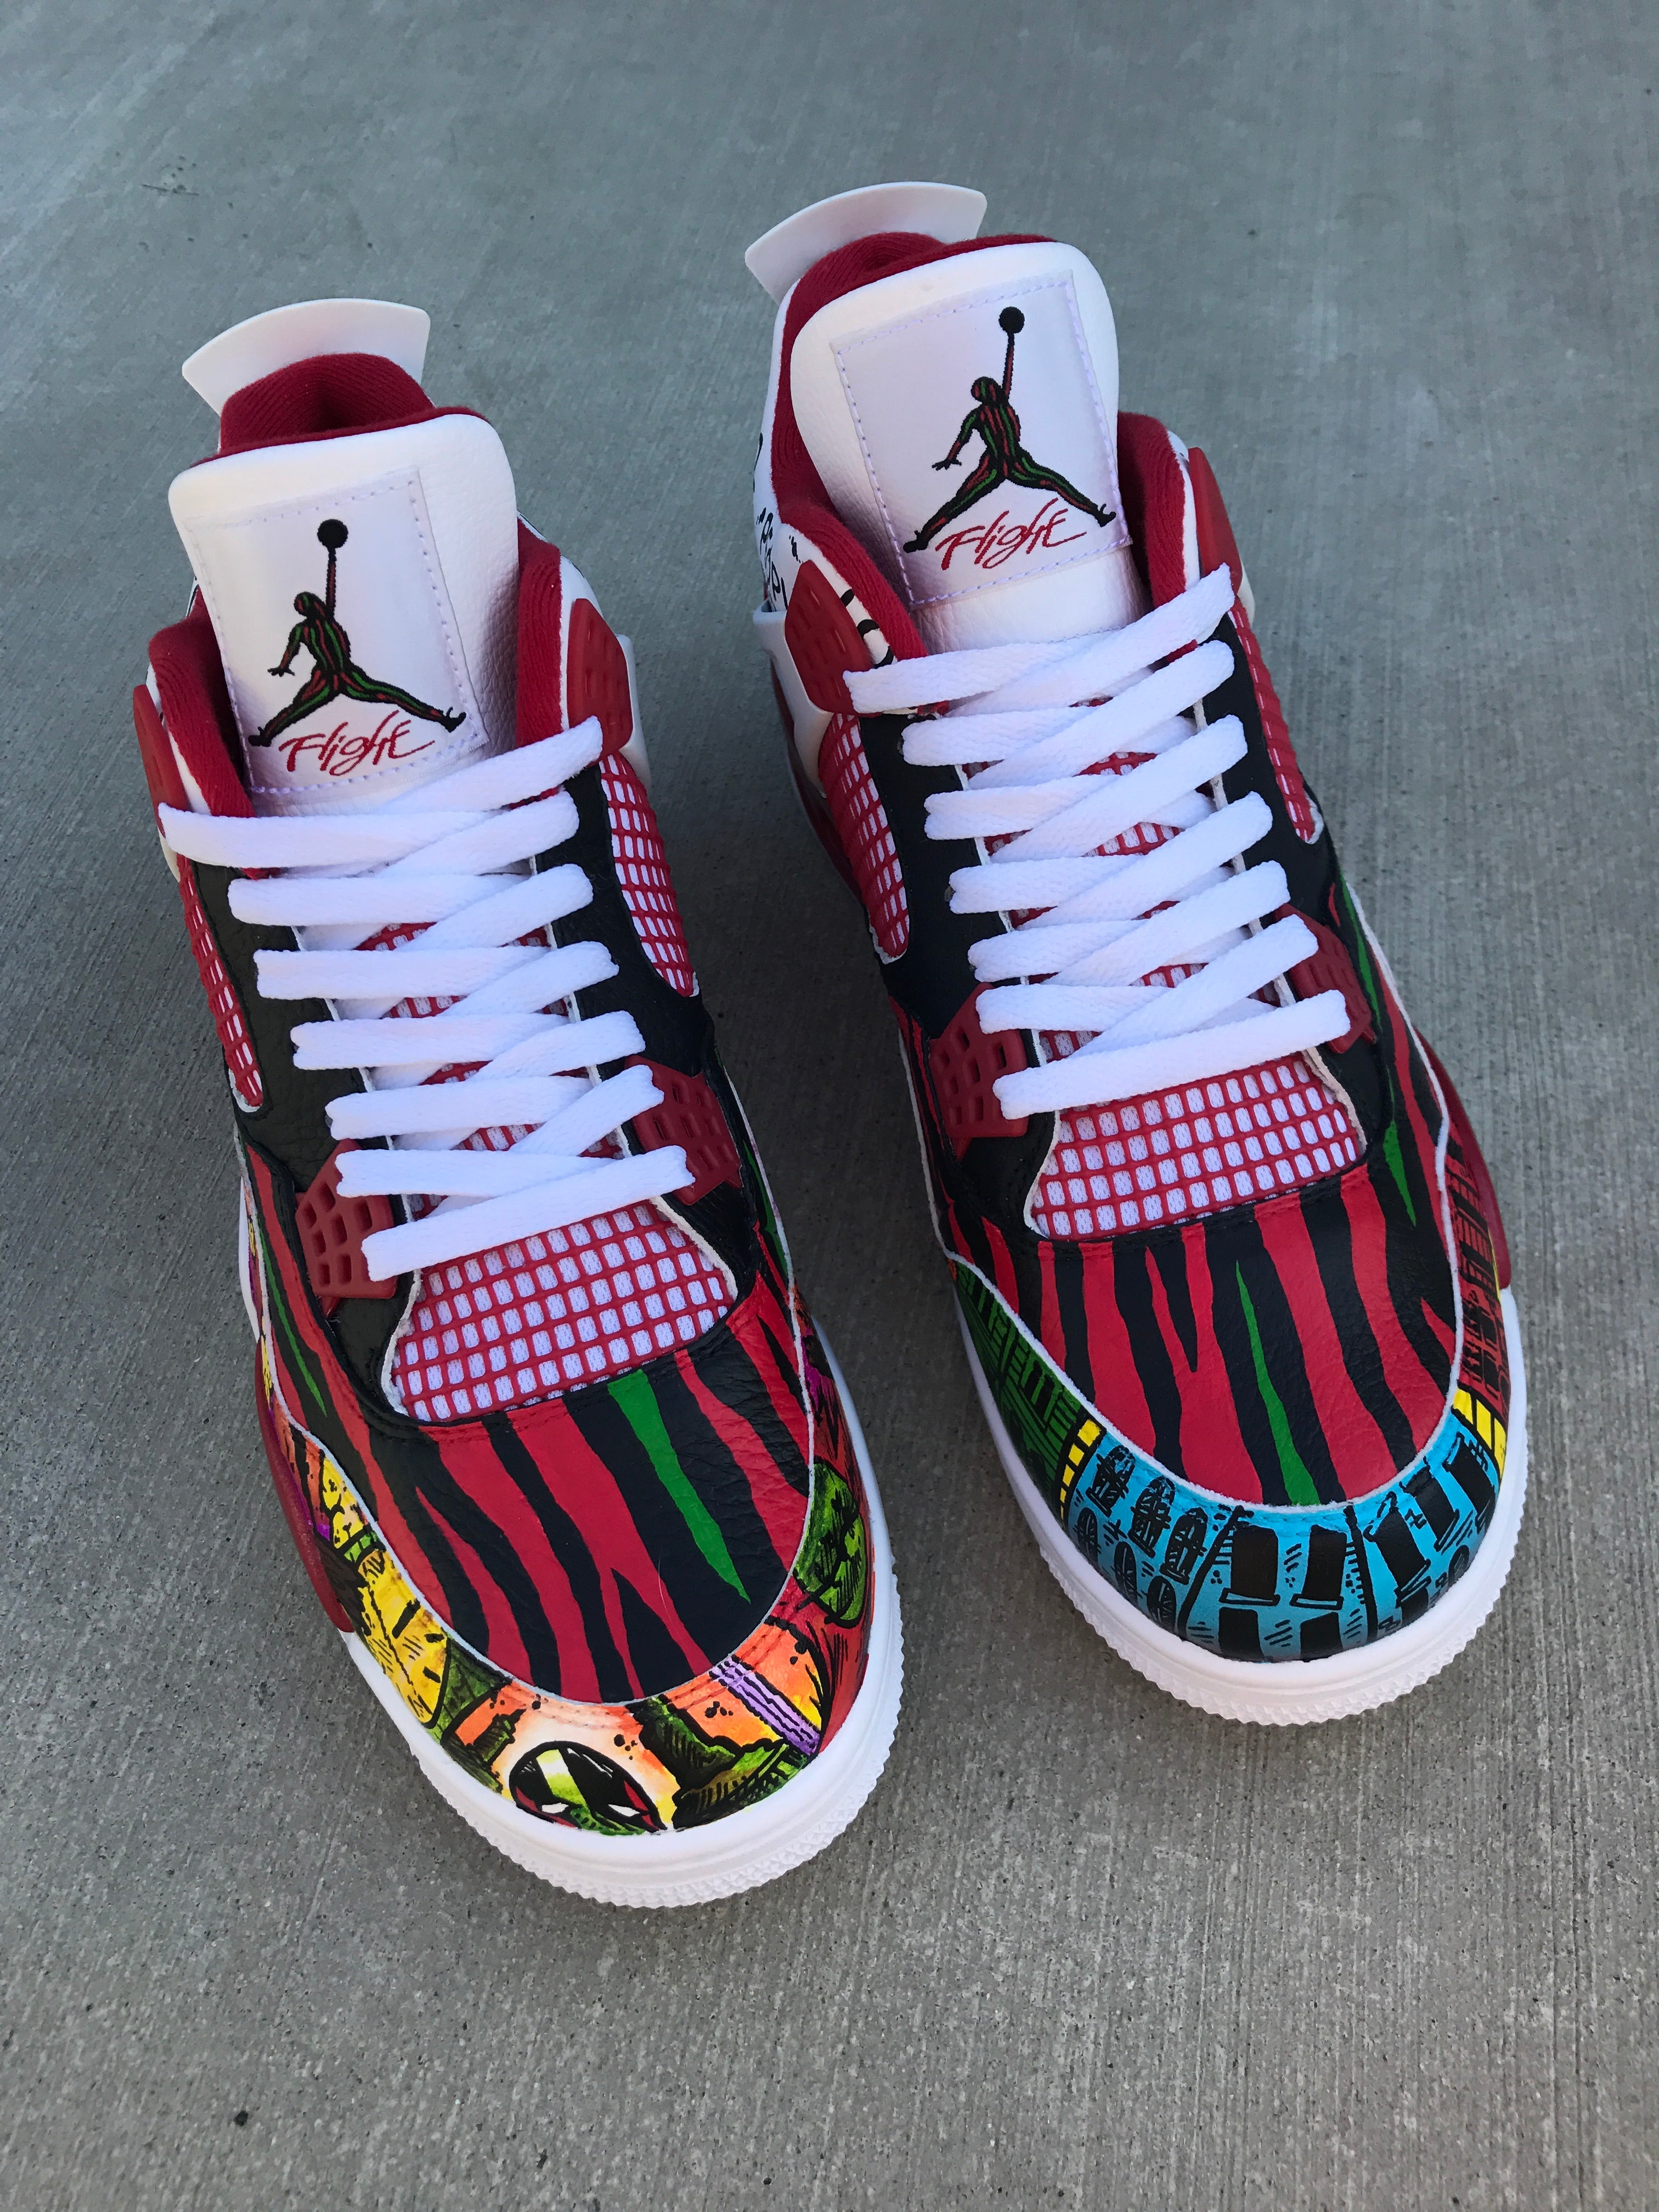 De La Soul - Nike Jordan retro shoes